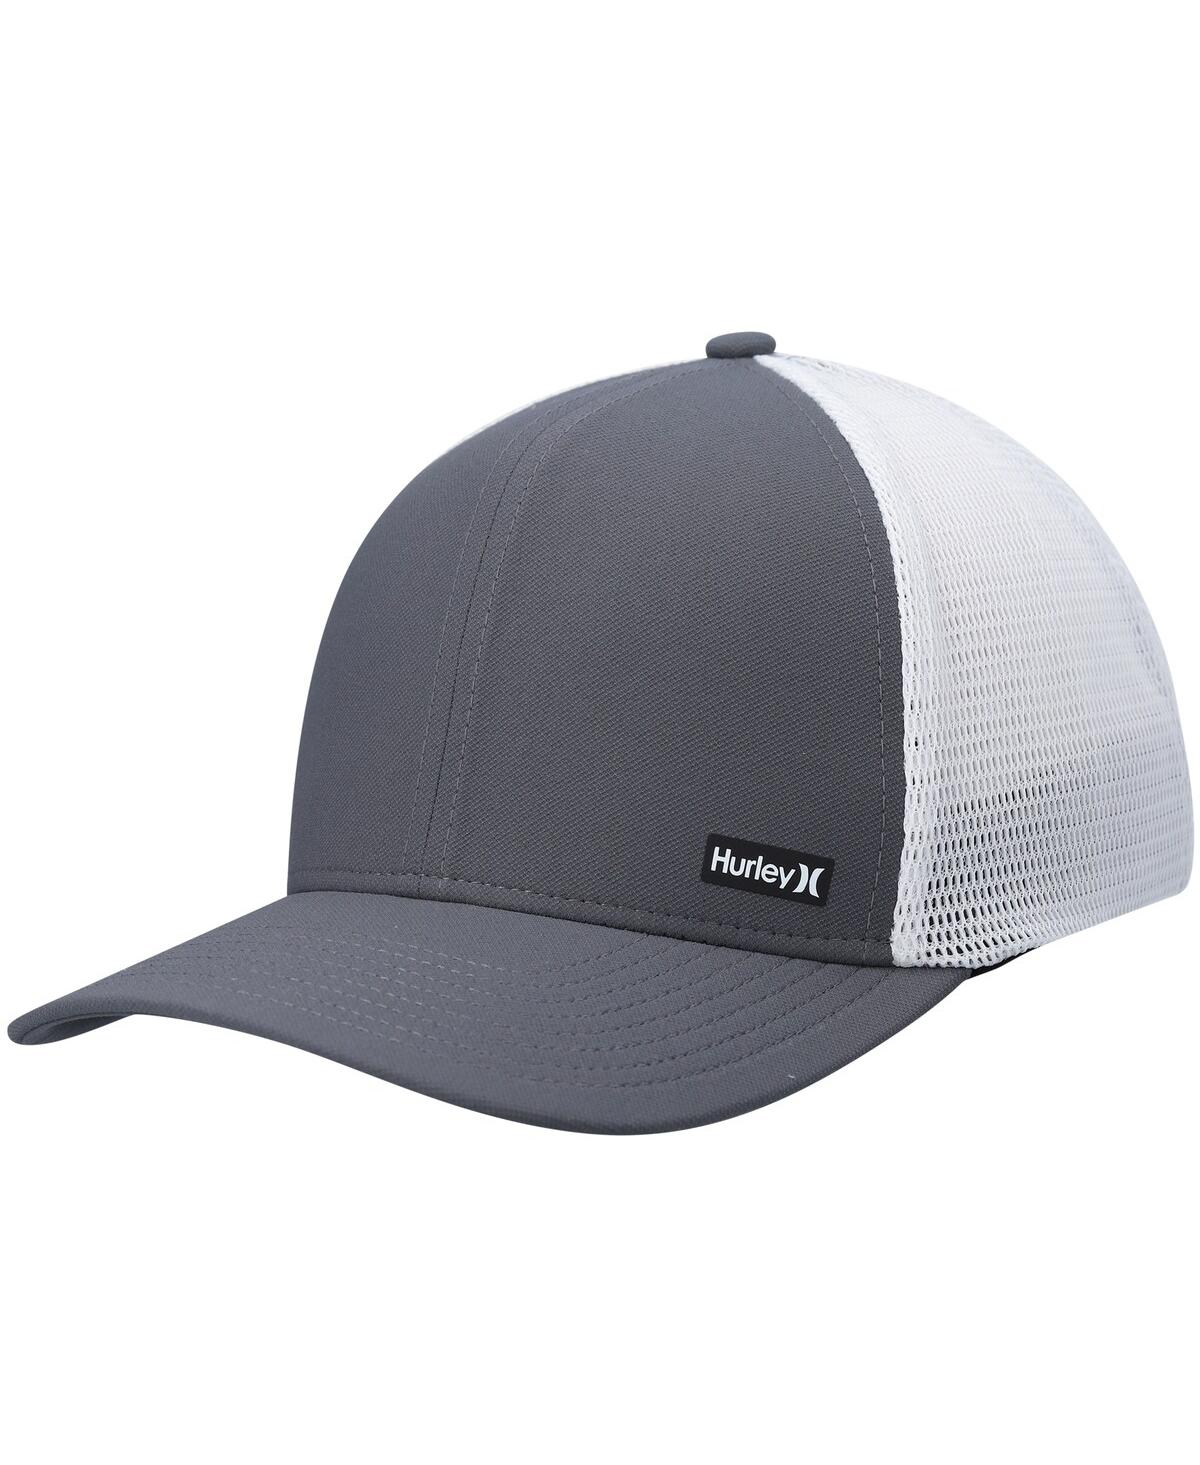 Men's Hurley Graphite, White League Trucker Snapback Hat - Graphite, White